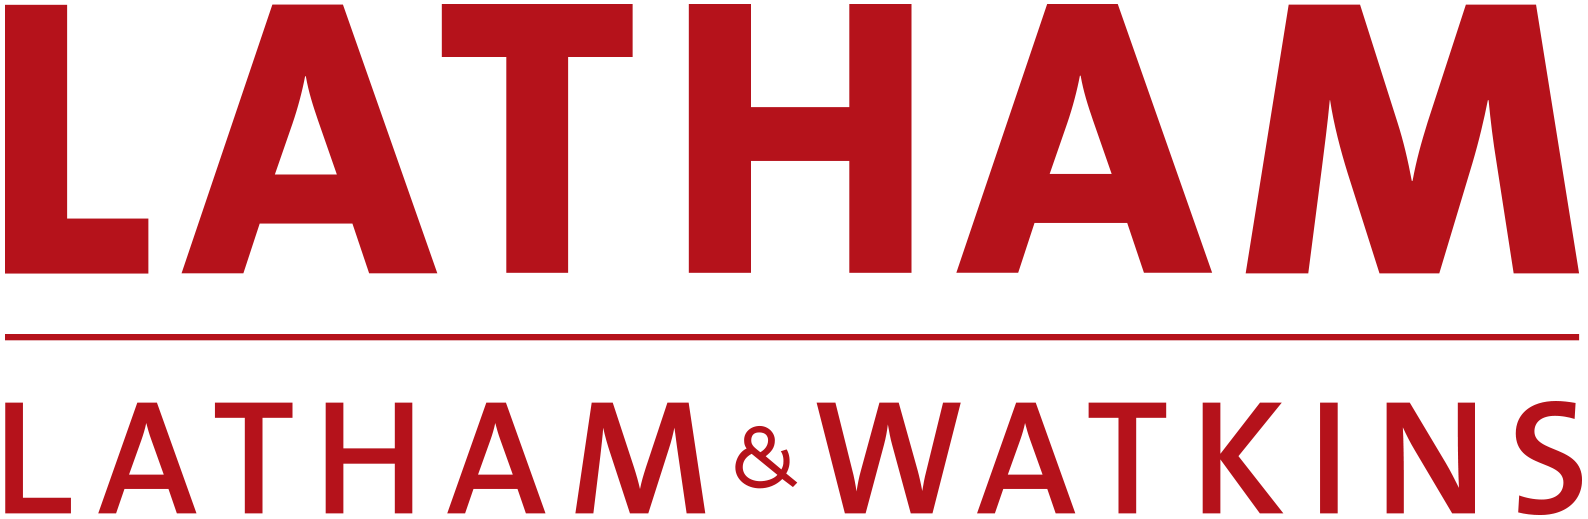 Latham logo.png